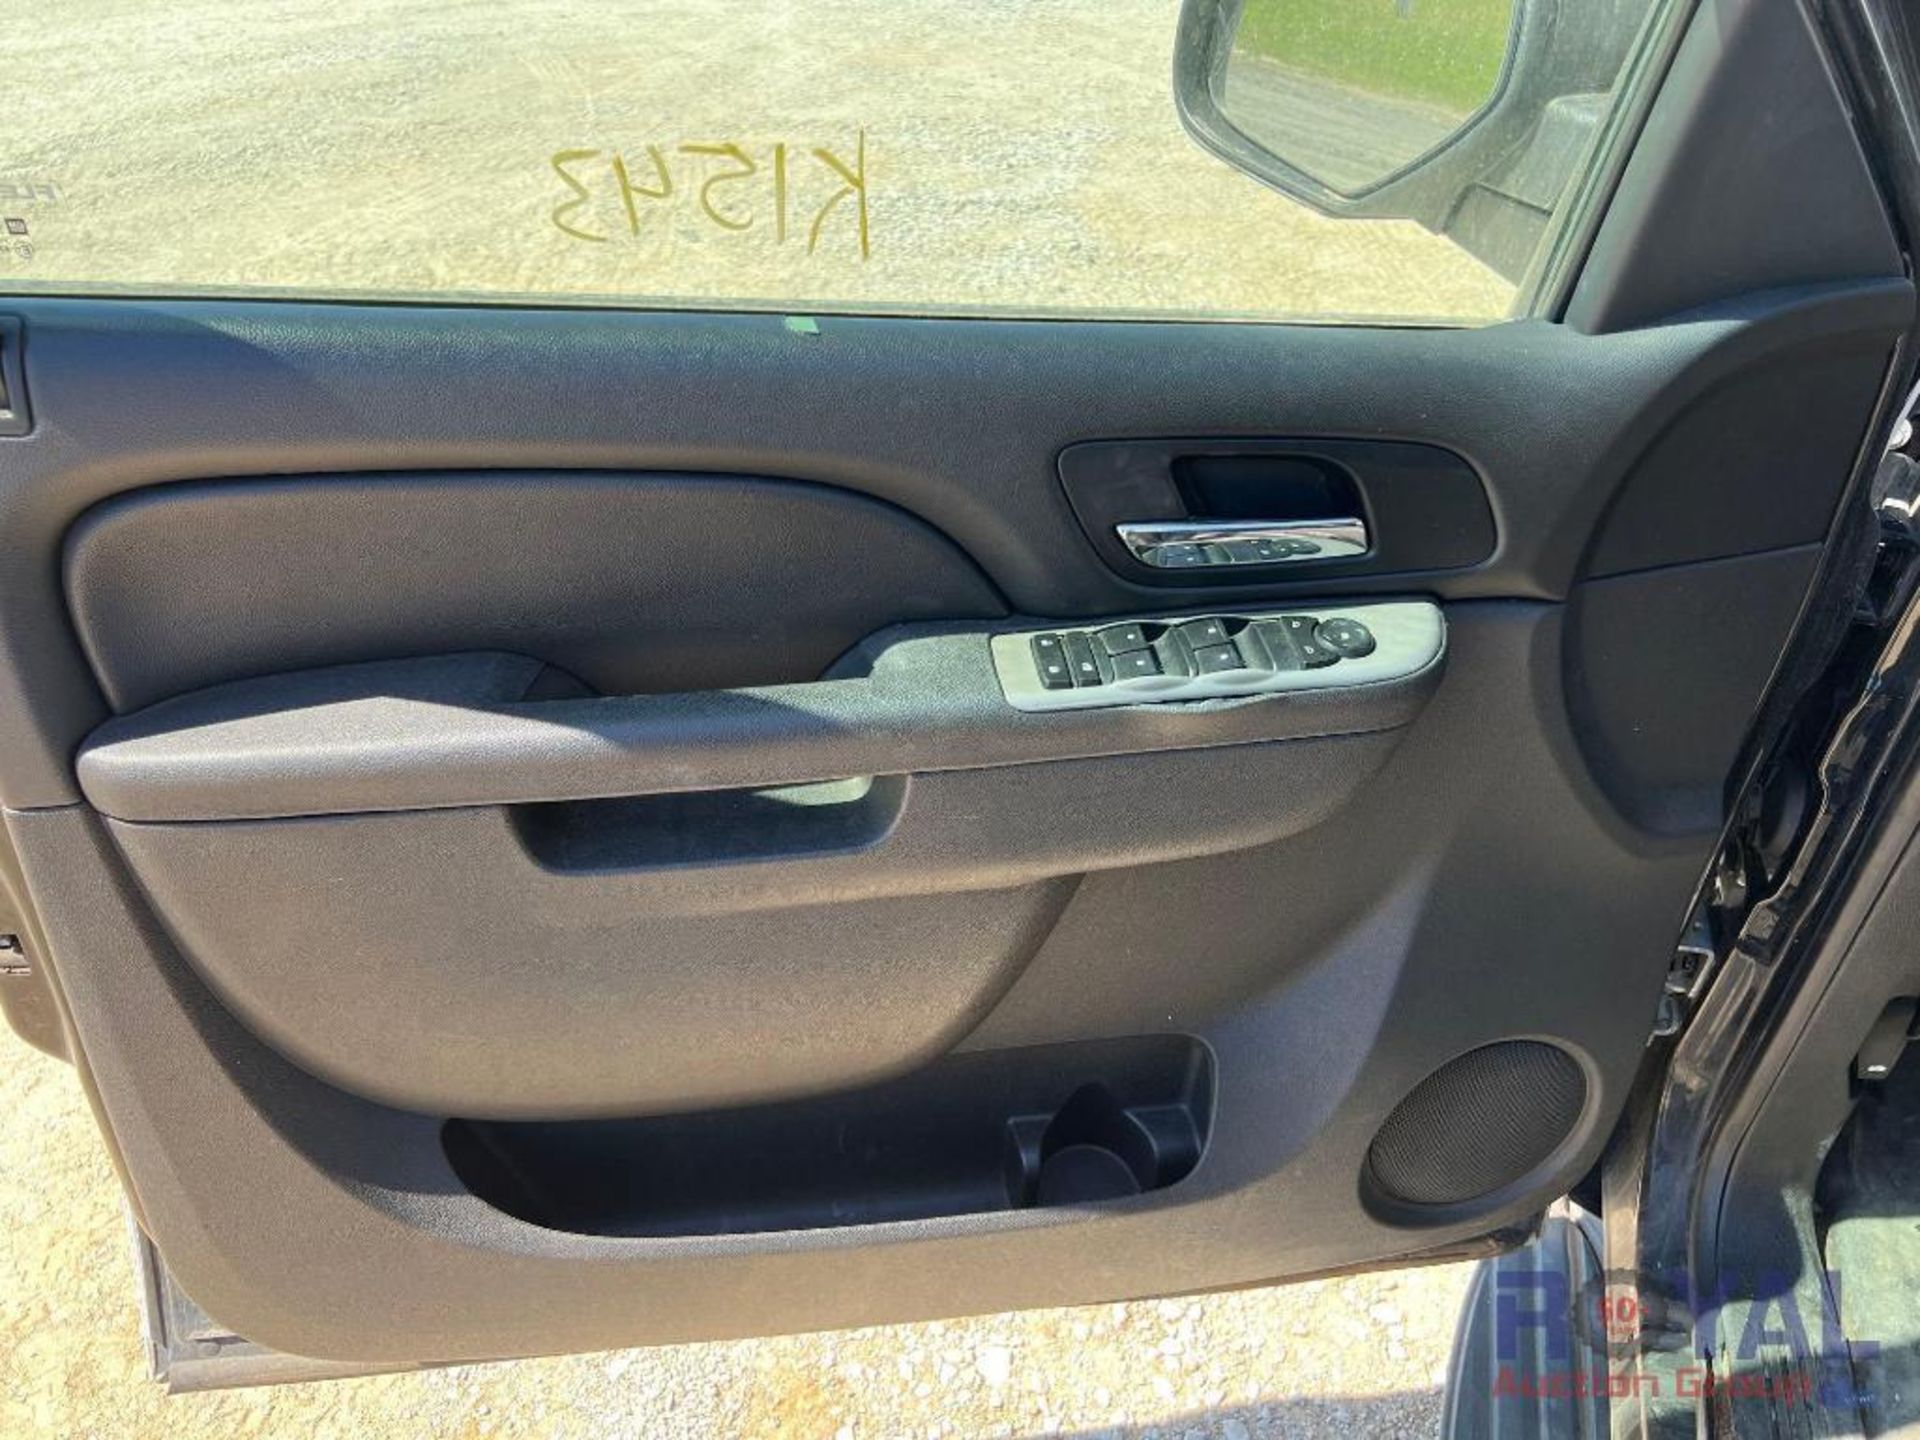 2014 Chevrolet Tahoe SUV - Image 18 of 49